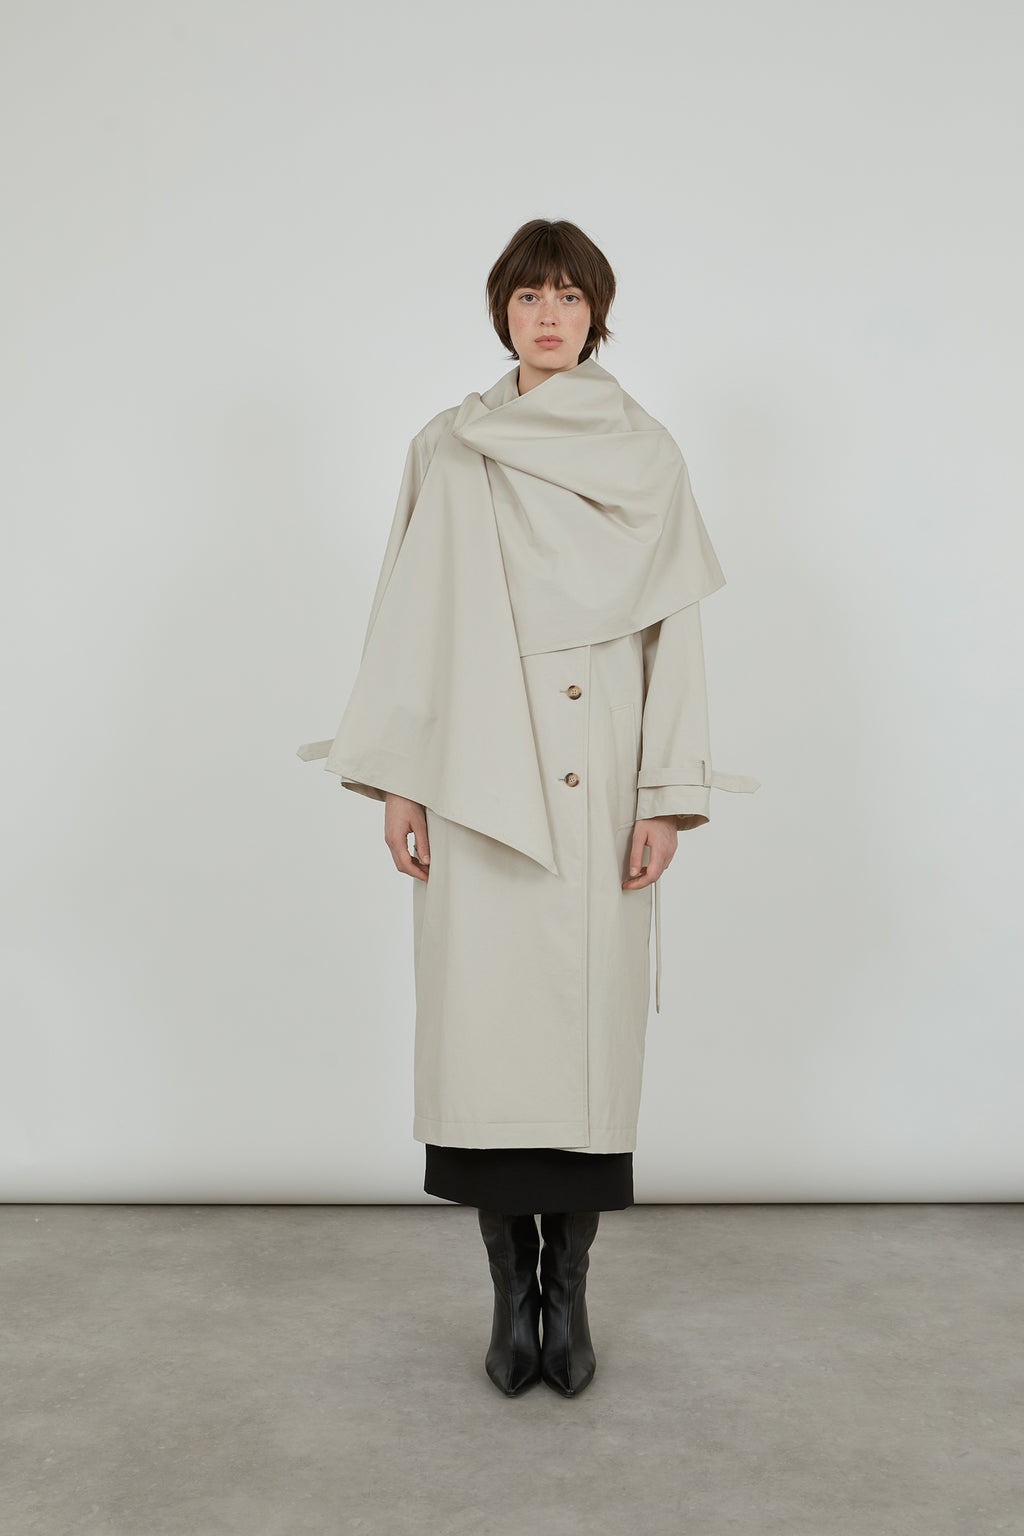 Alex trench coat & Macha scarf | Black - Water repellent cotton